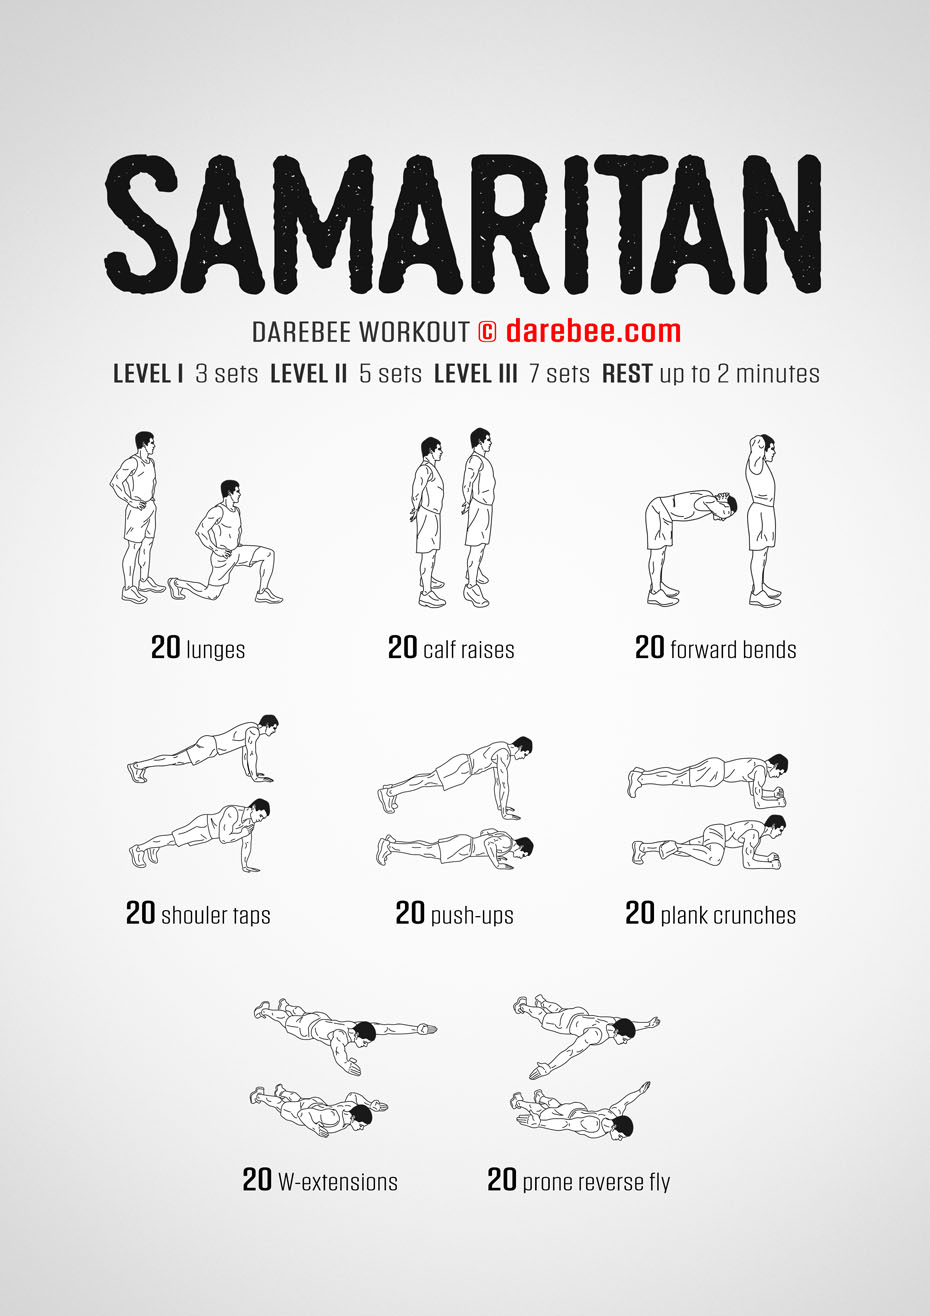 Samaritan is a Darebee home fitness full body, no-equipment strength workout.